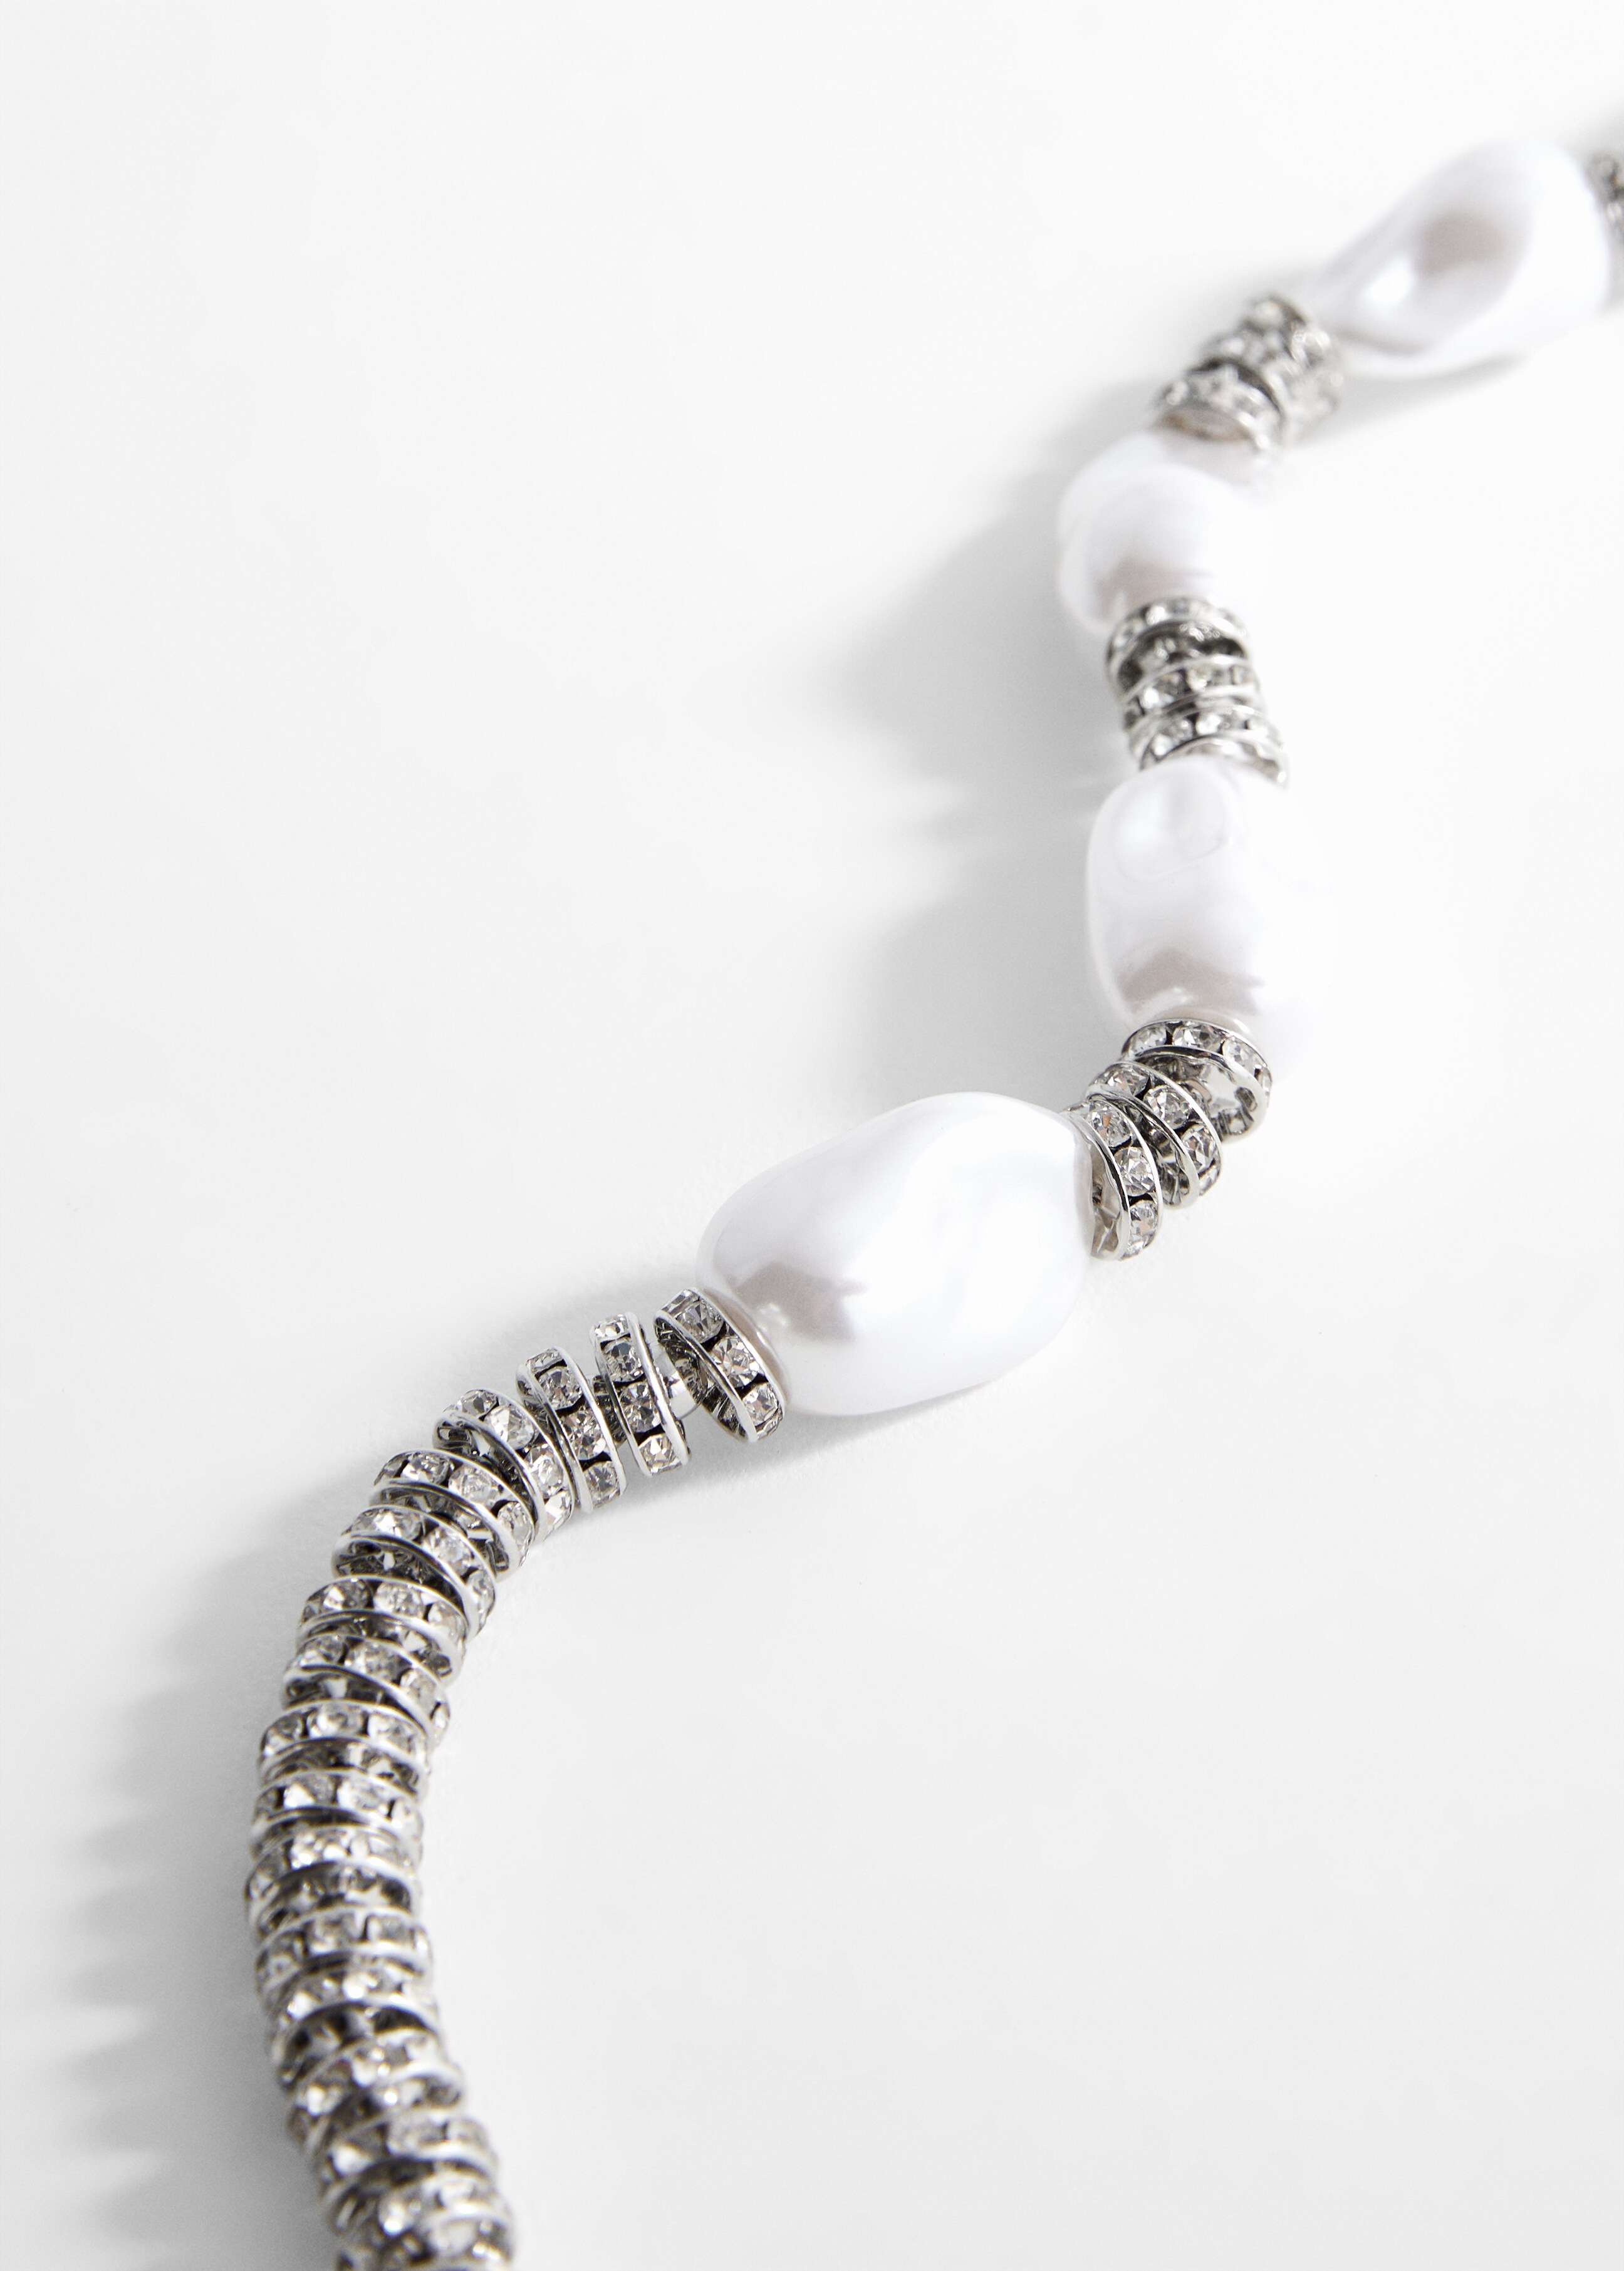 Mixed bead necklace - Medium plane